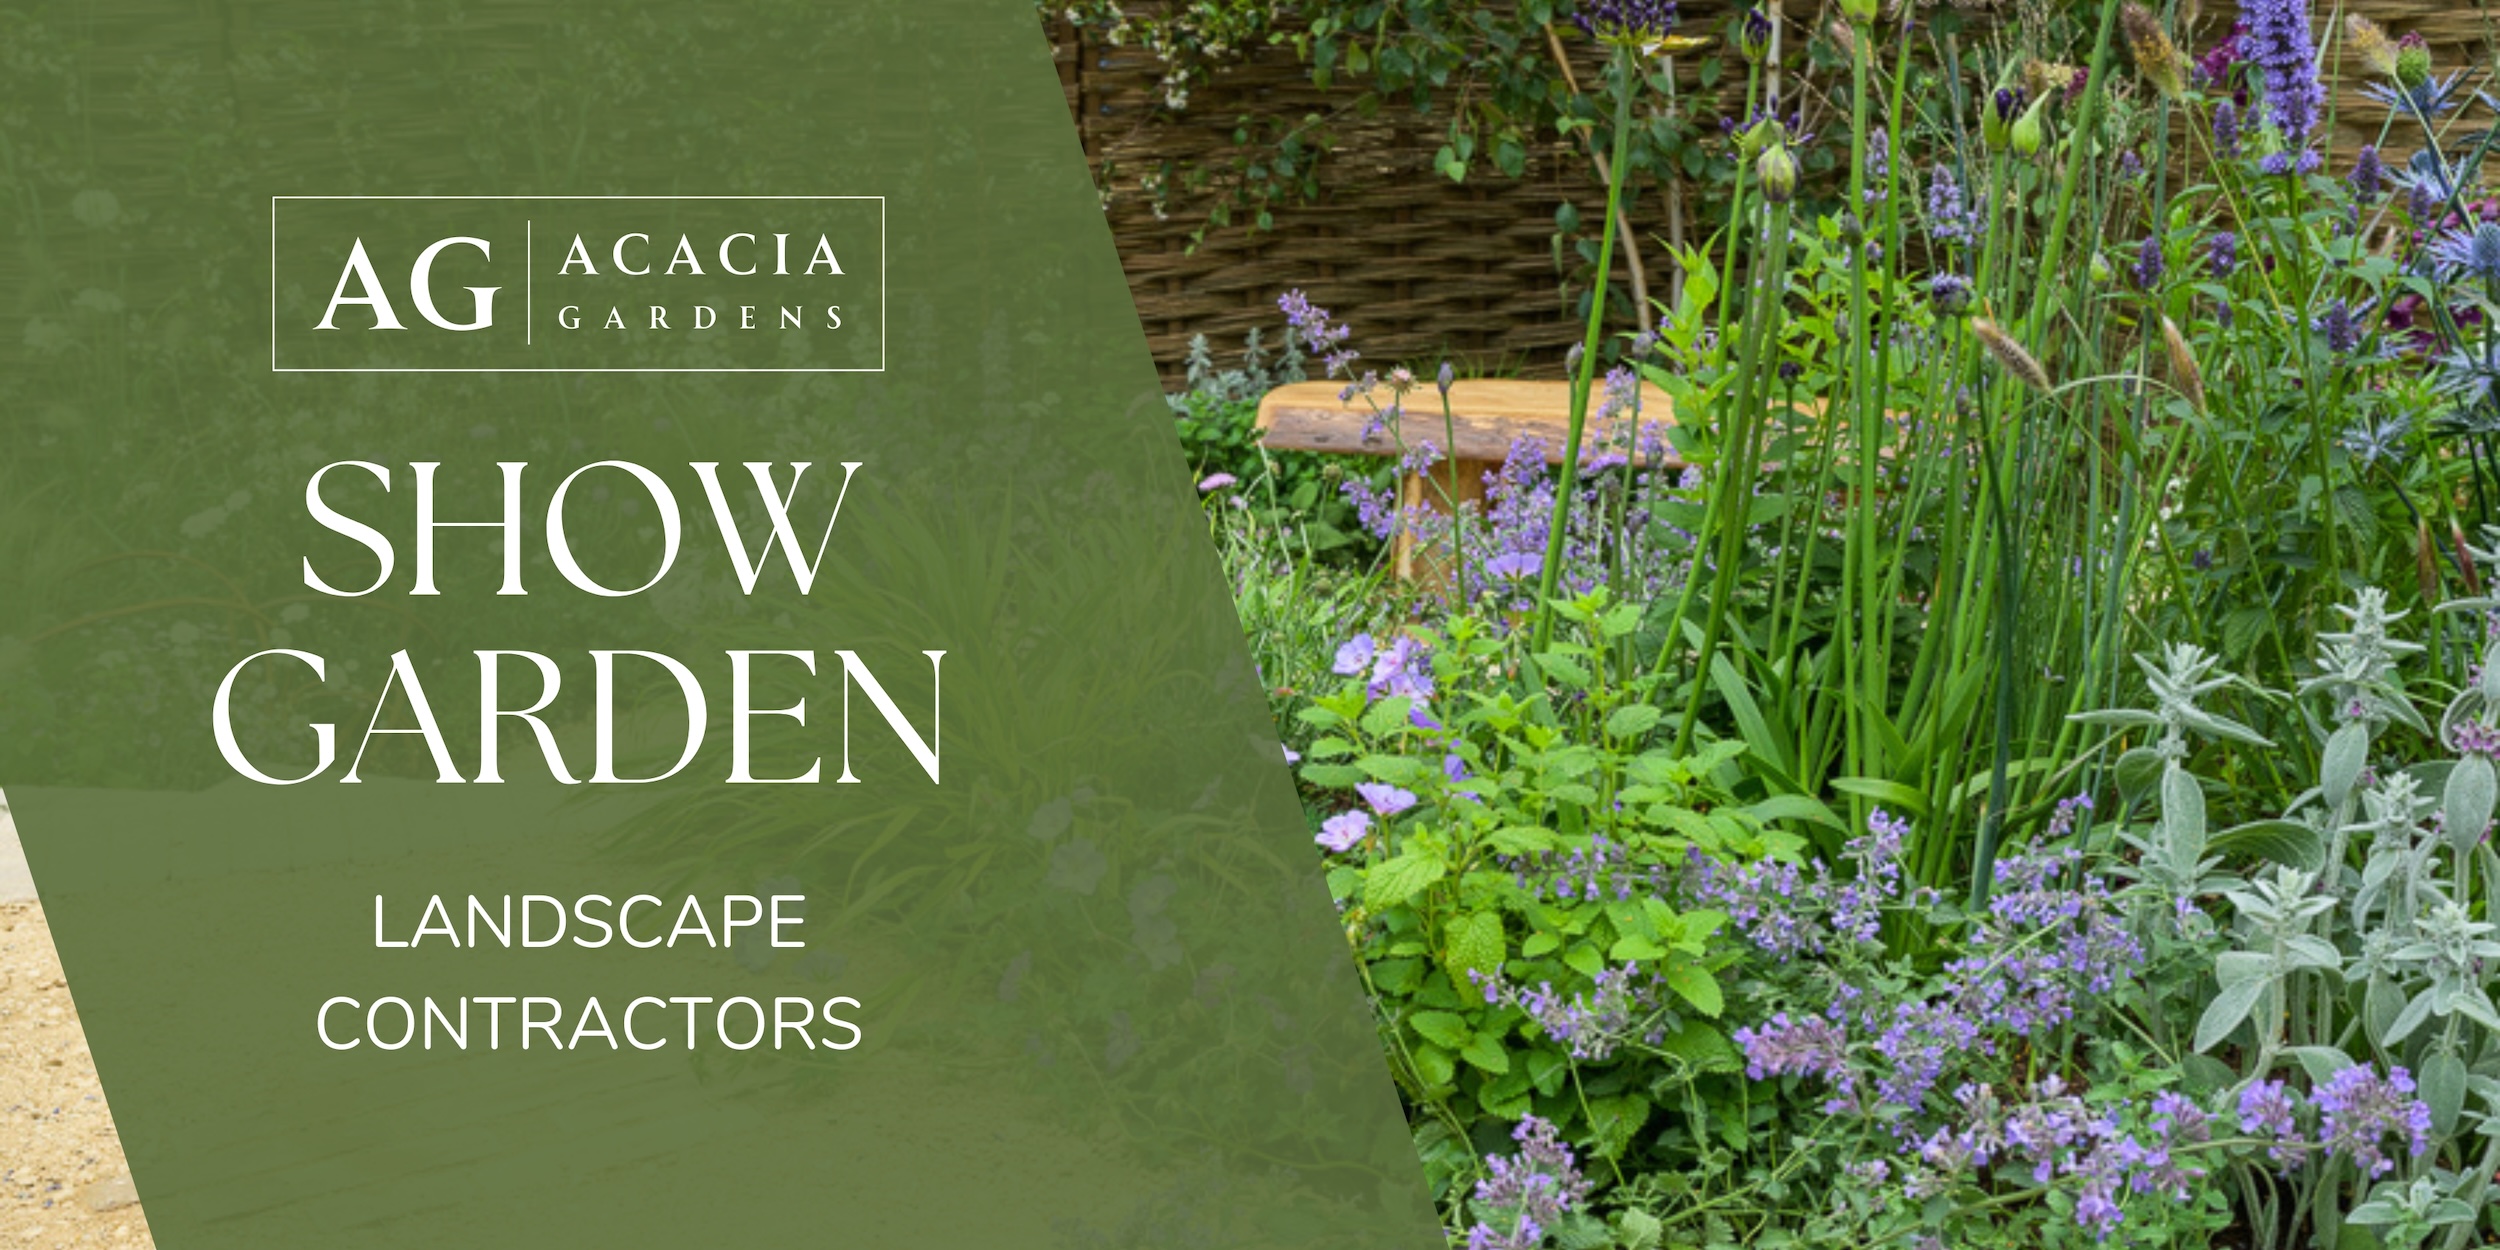 acacia gardens show garden landscape contractors - 1